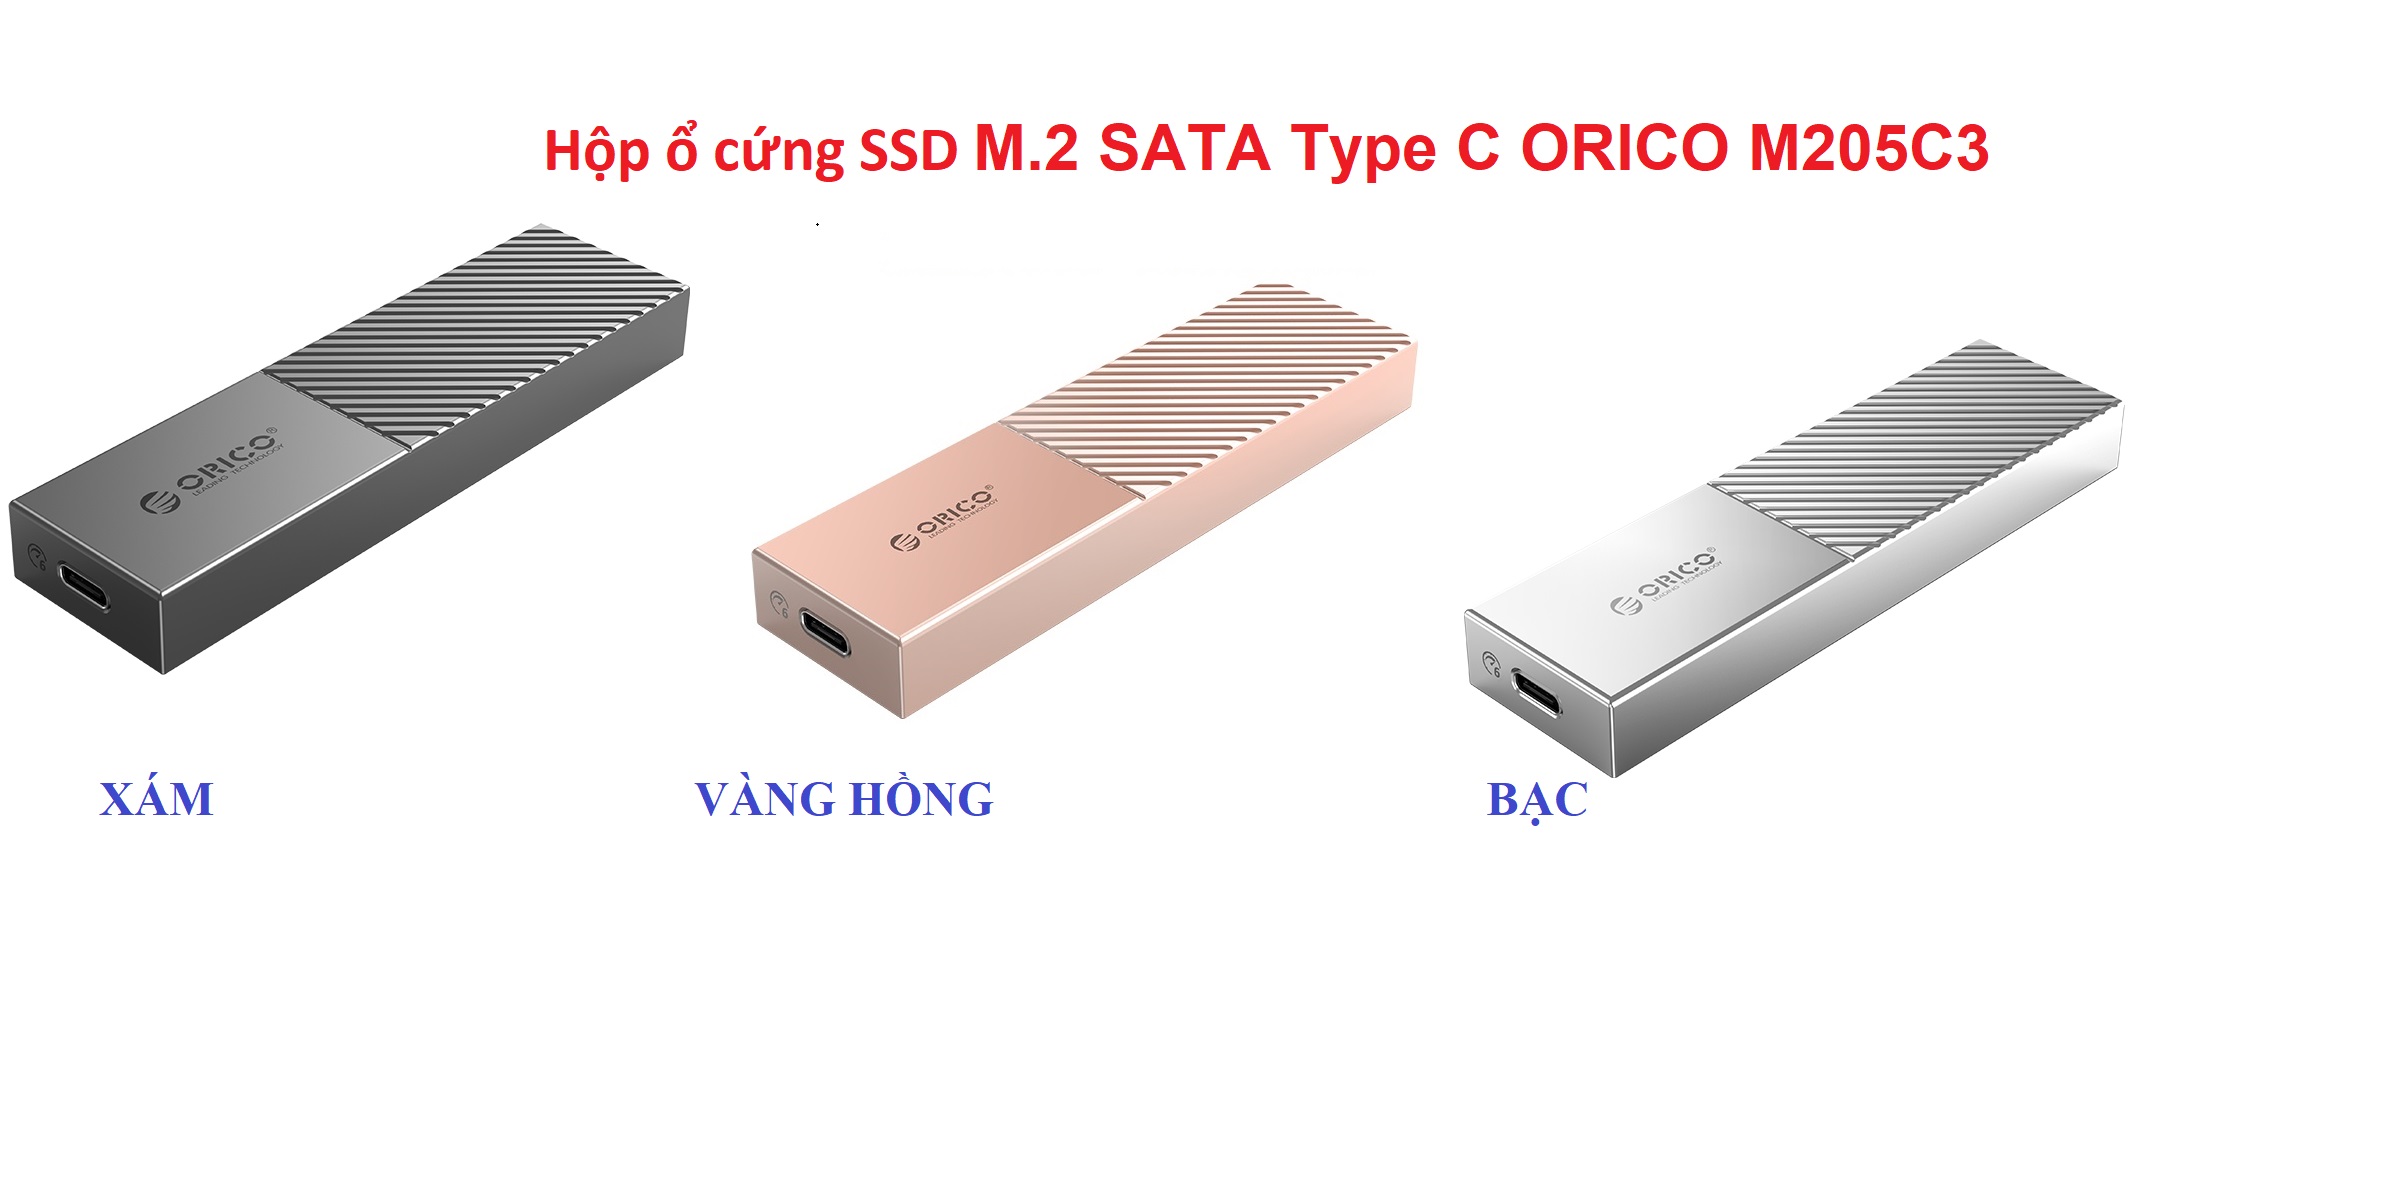 Hộp ổ cứng SSD M.2 SATA Type C ORICO M205C3